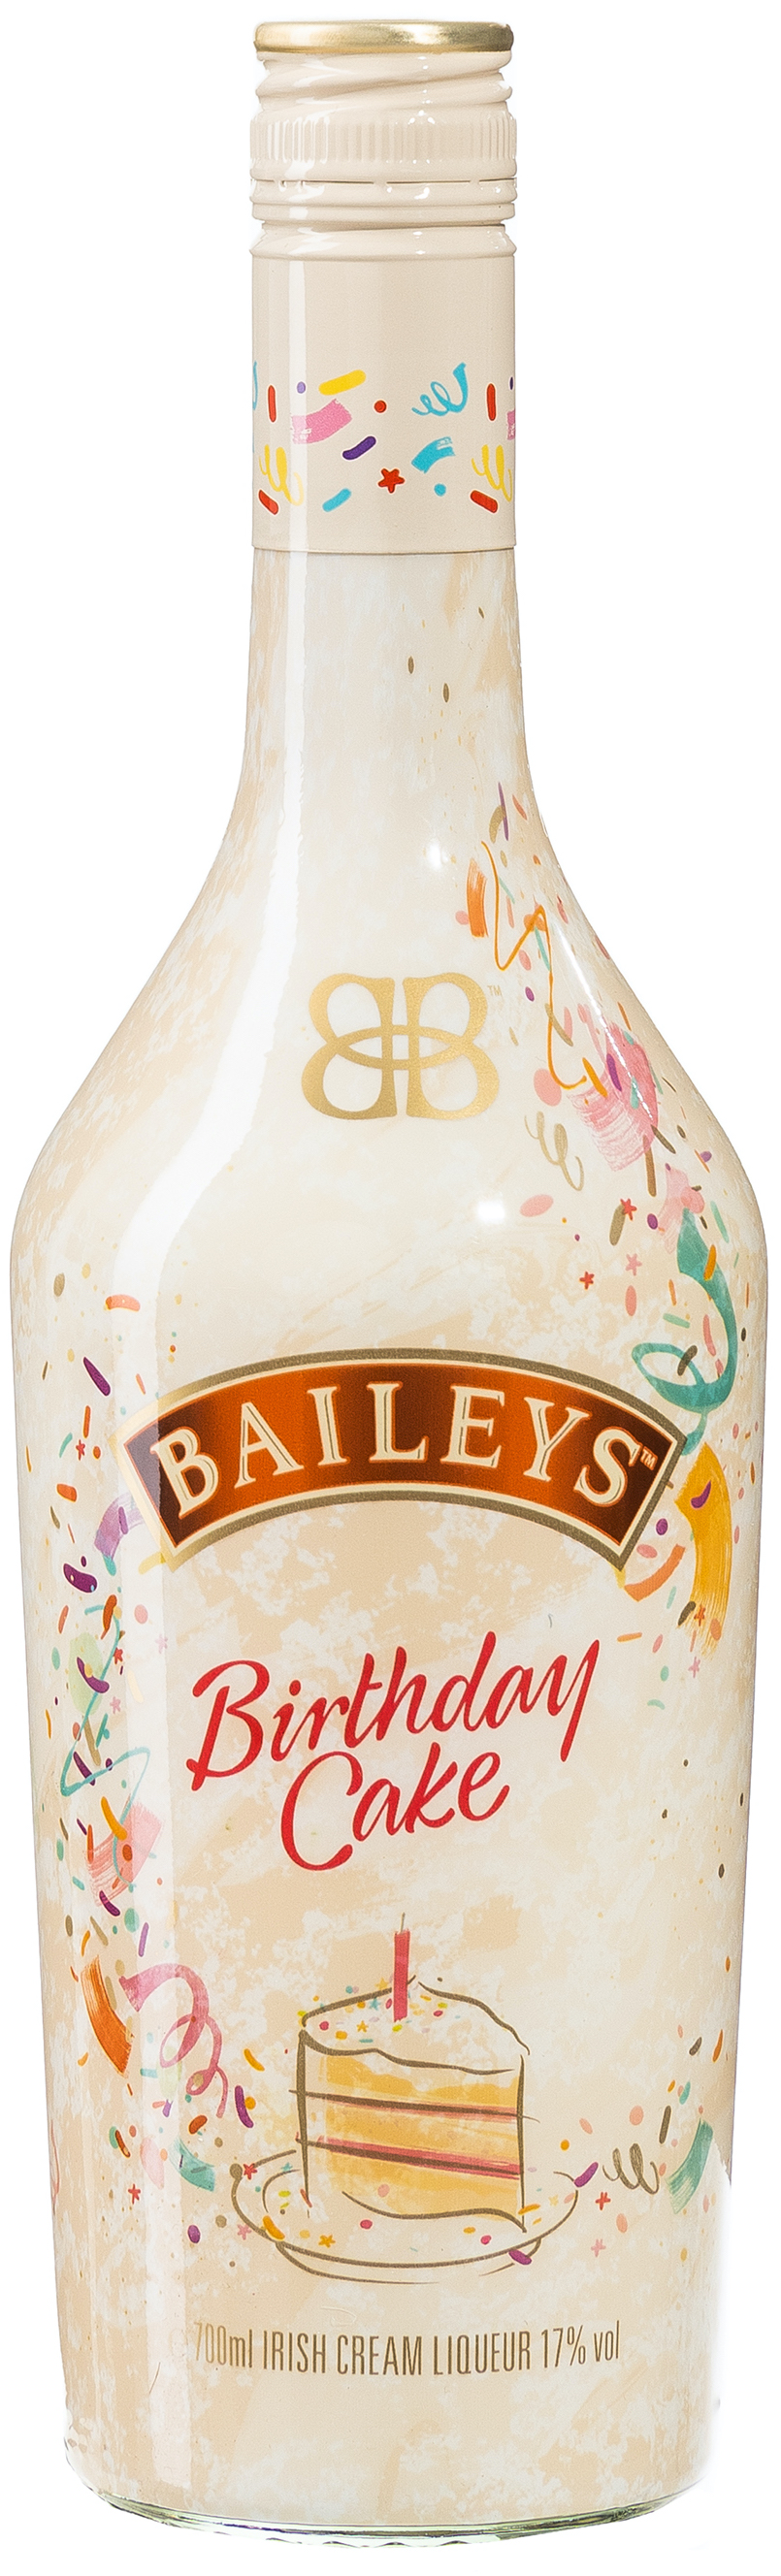 Baileys Birthday Cake 17% vol. 0,7L